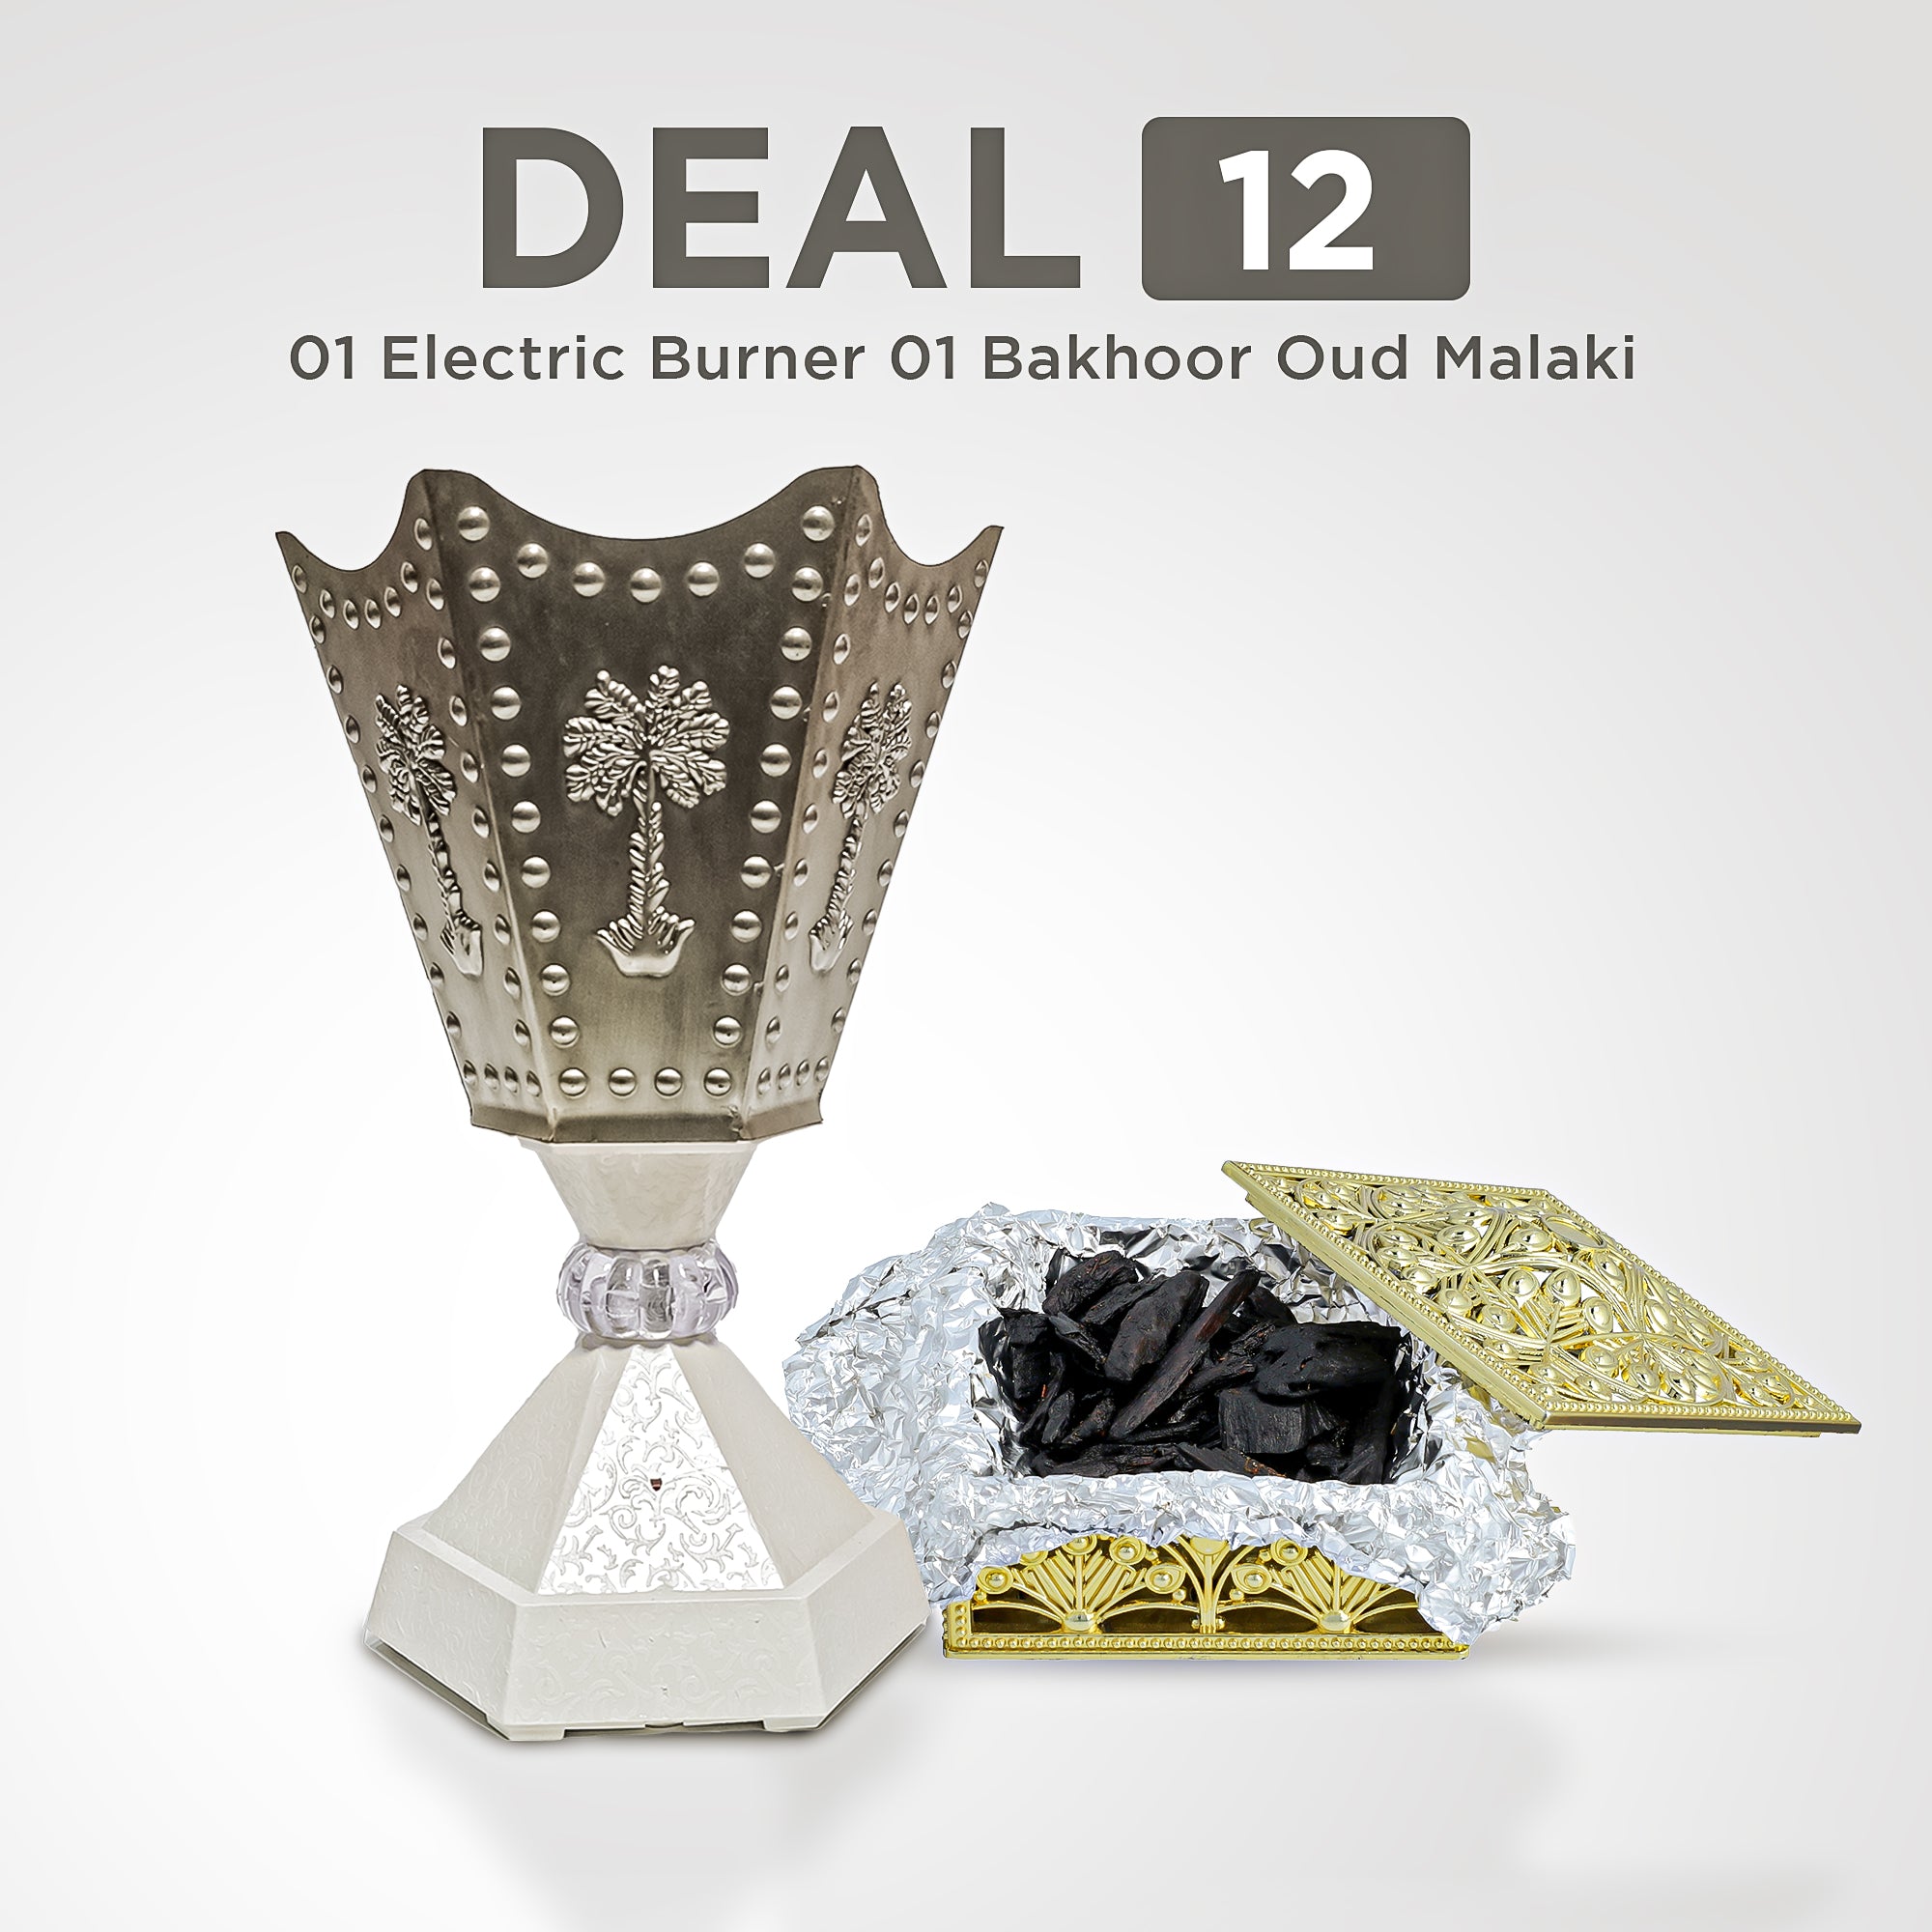 Deal 12 (burner and bakhoor oud malaki )